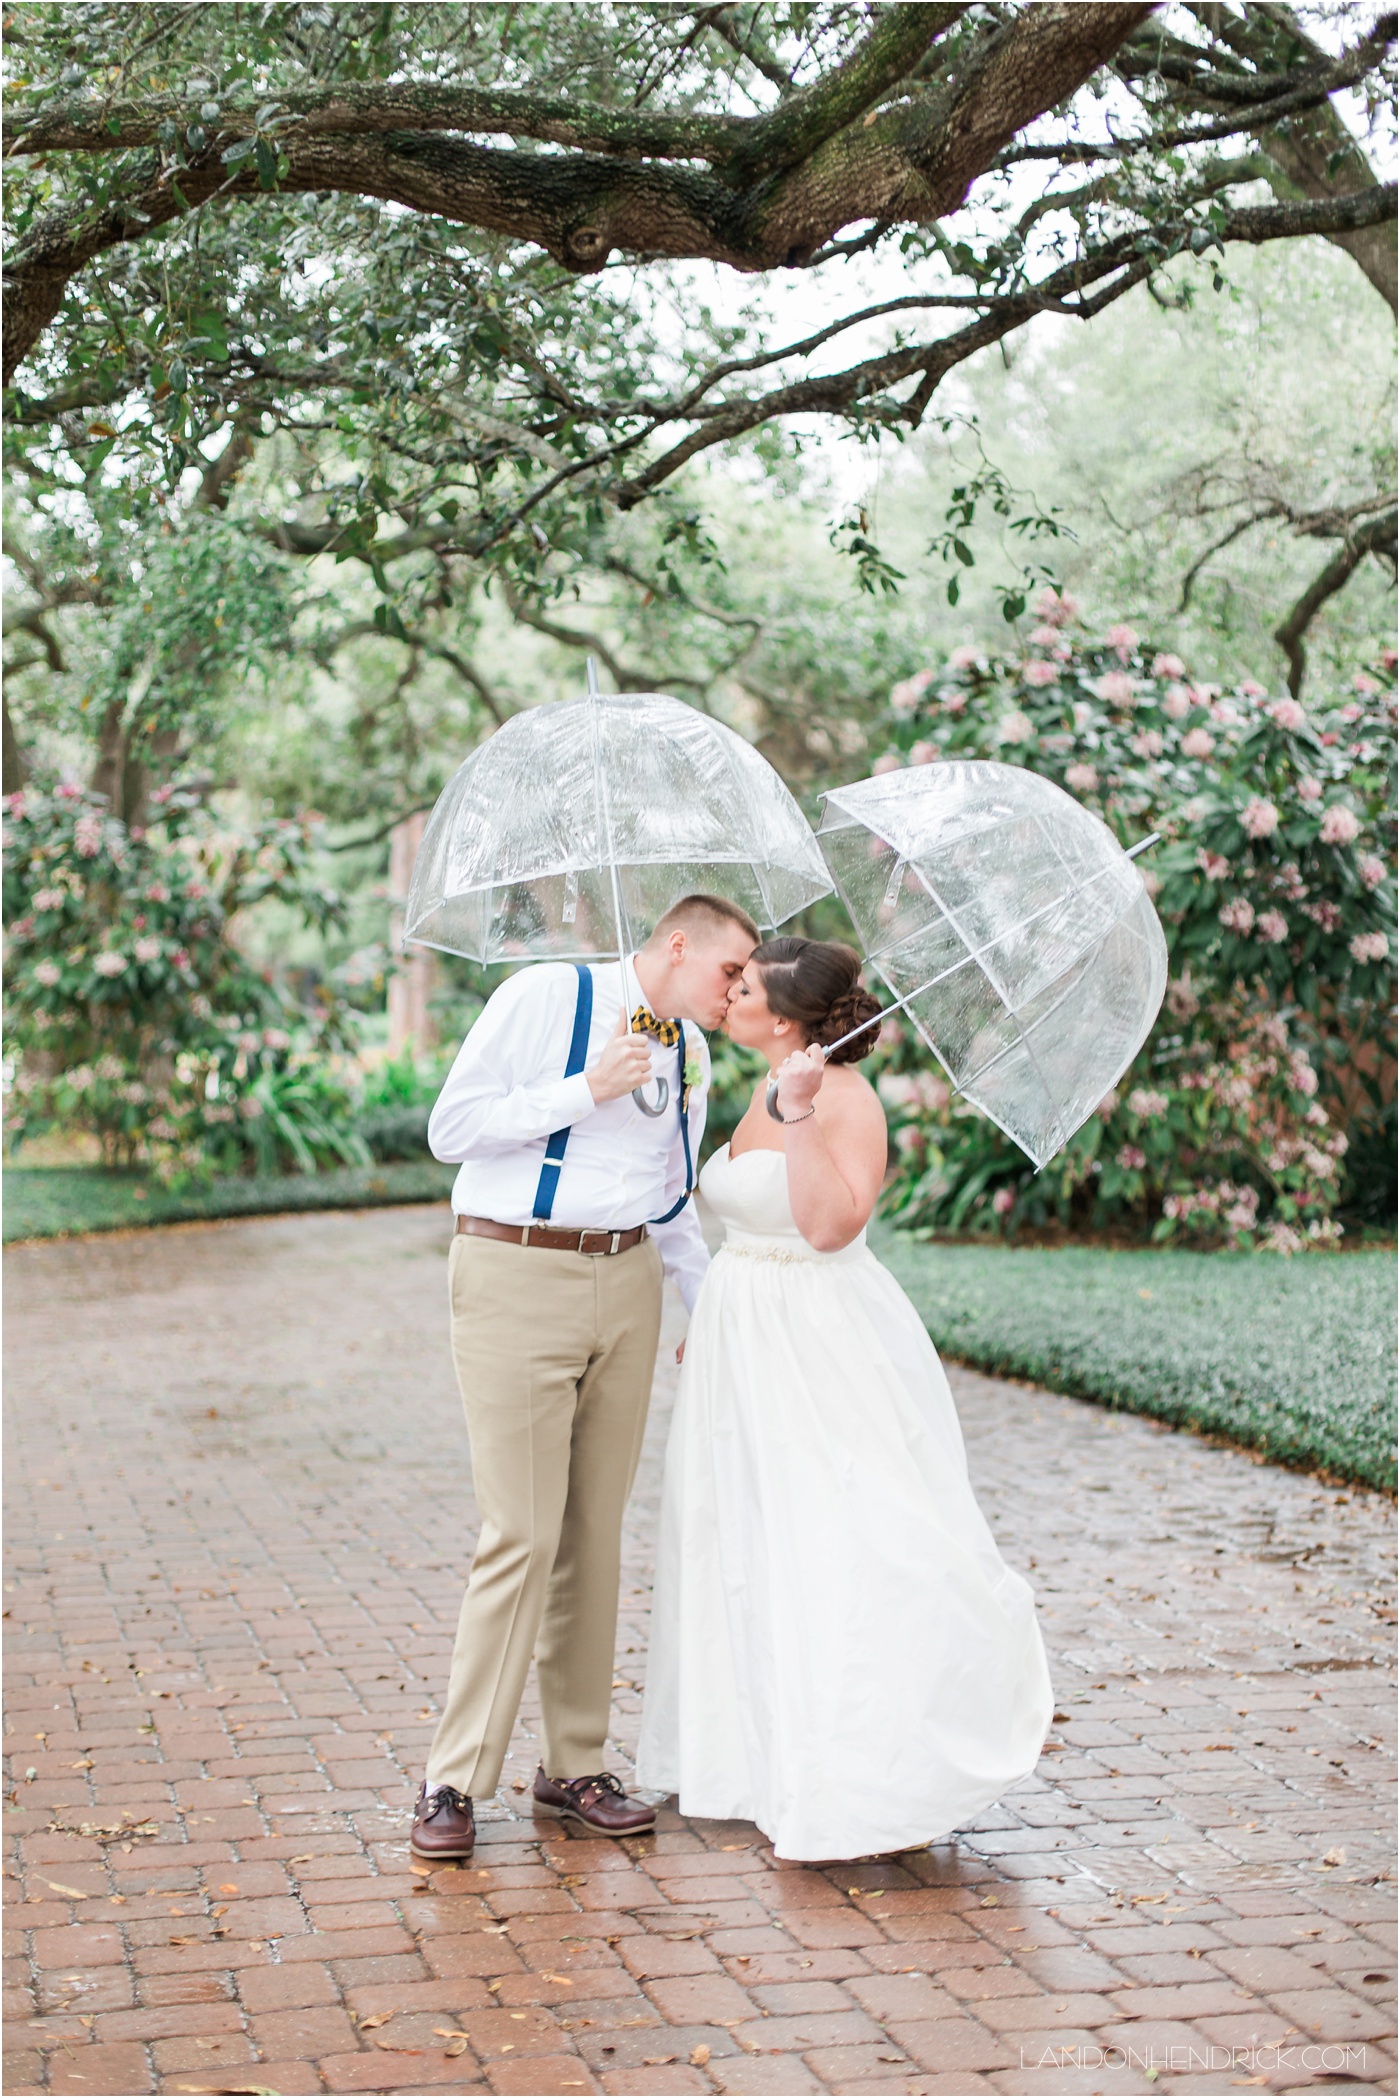 How to Make a Rainy Wedding Day Amazing